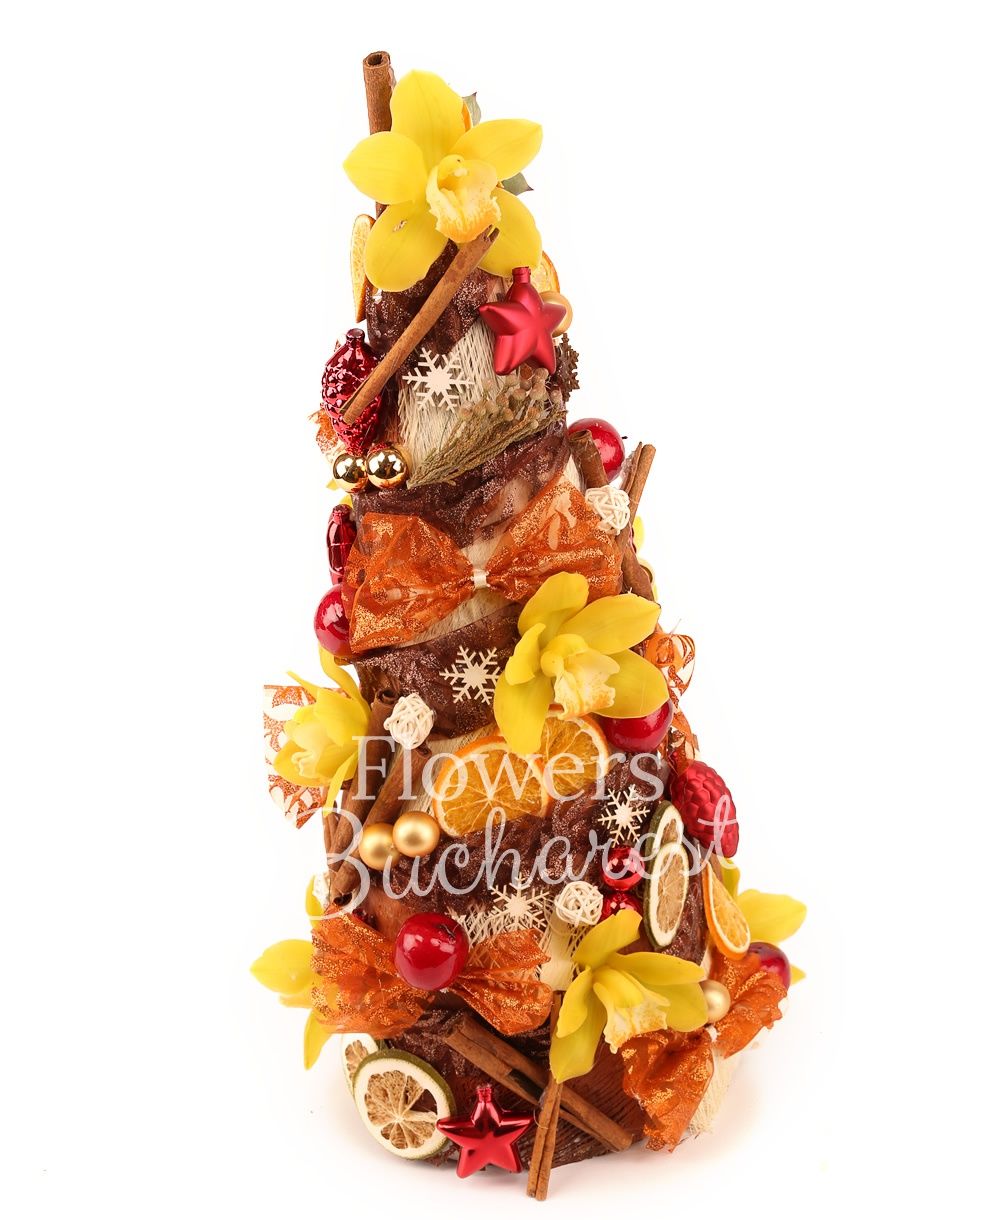 yellow cymbidium, cinnamon, dried oranges, apples, stars, cones, decorations